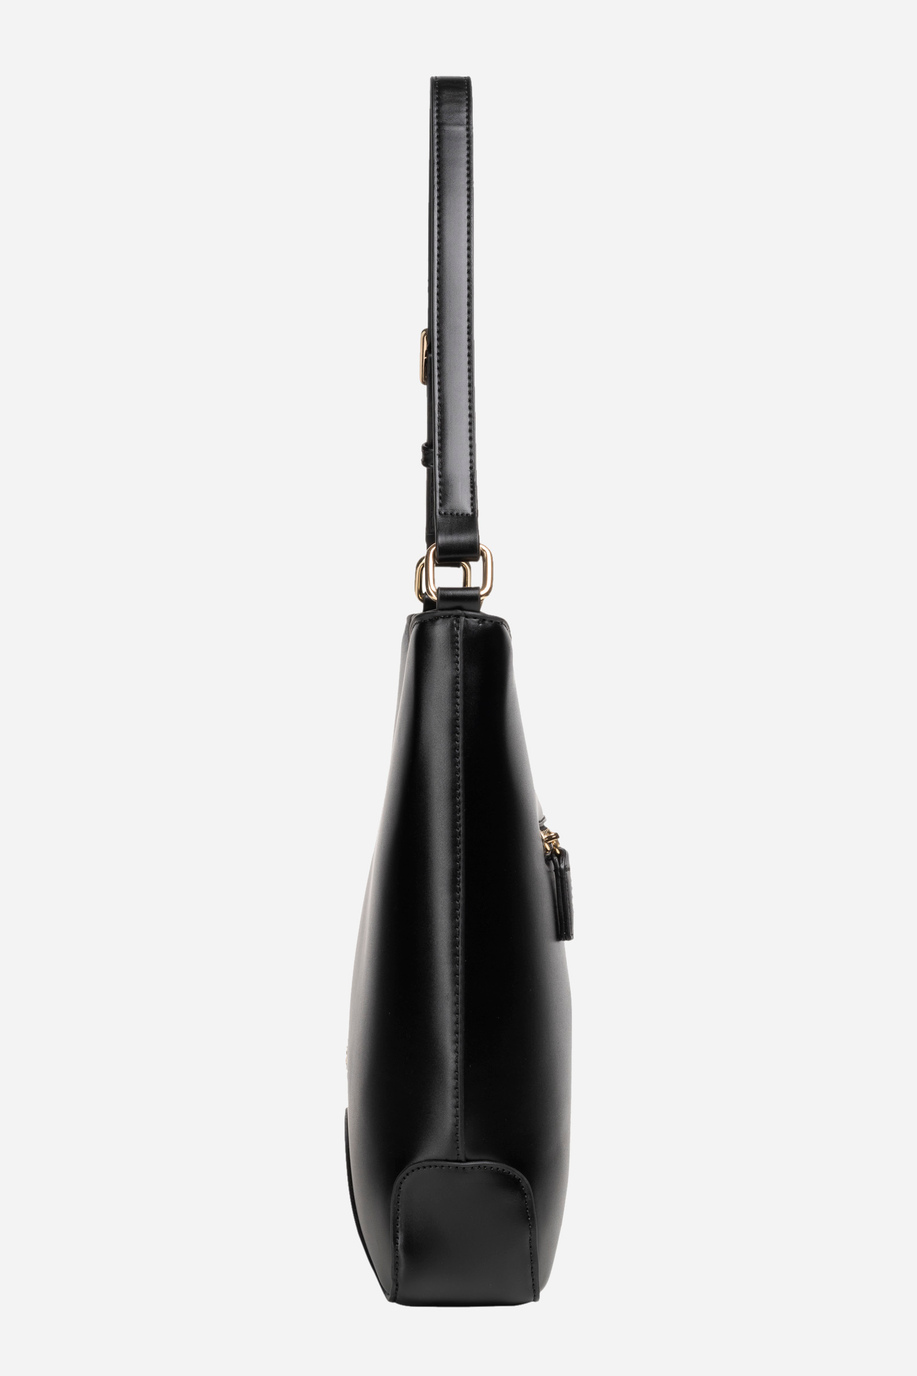 Black shoulder bag in pu fabric - Donatella - Accessories for her | La Martina - Official Online Shop